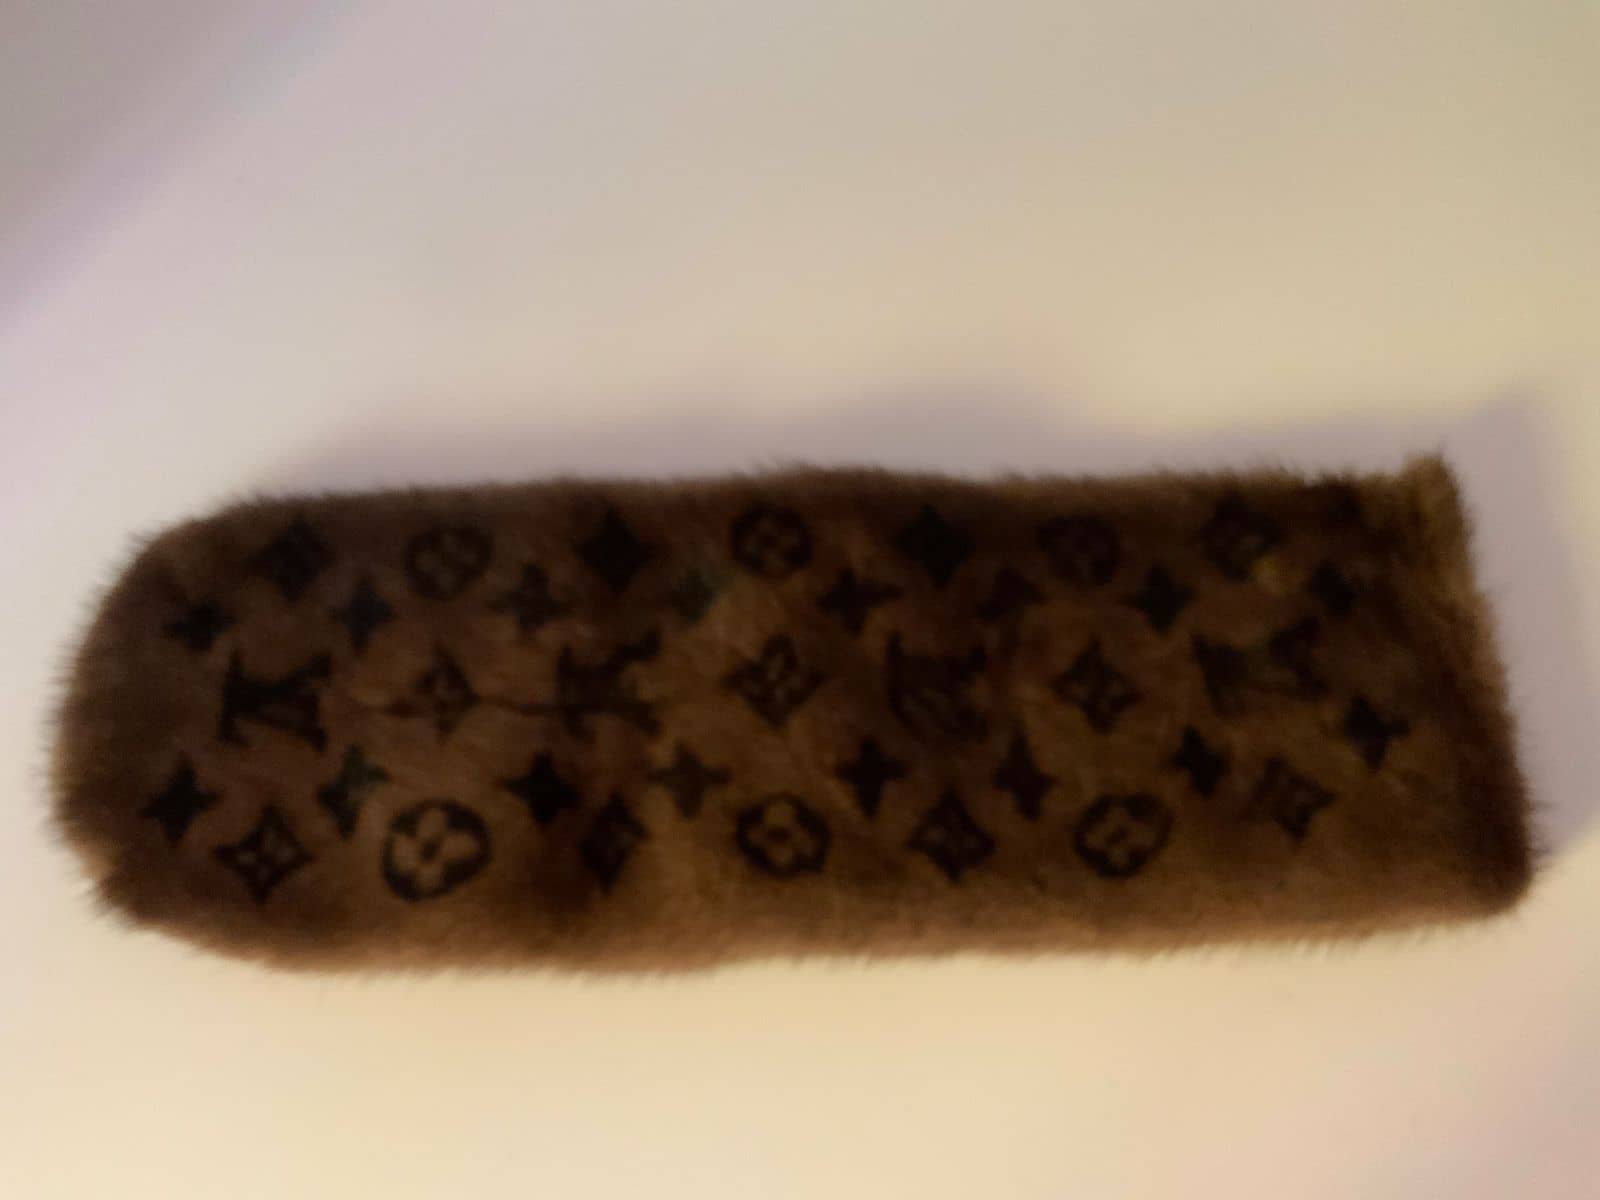 Louis Vuitton Monogram Logo Mink Fur Scarf